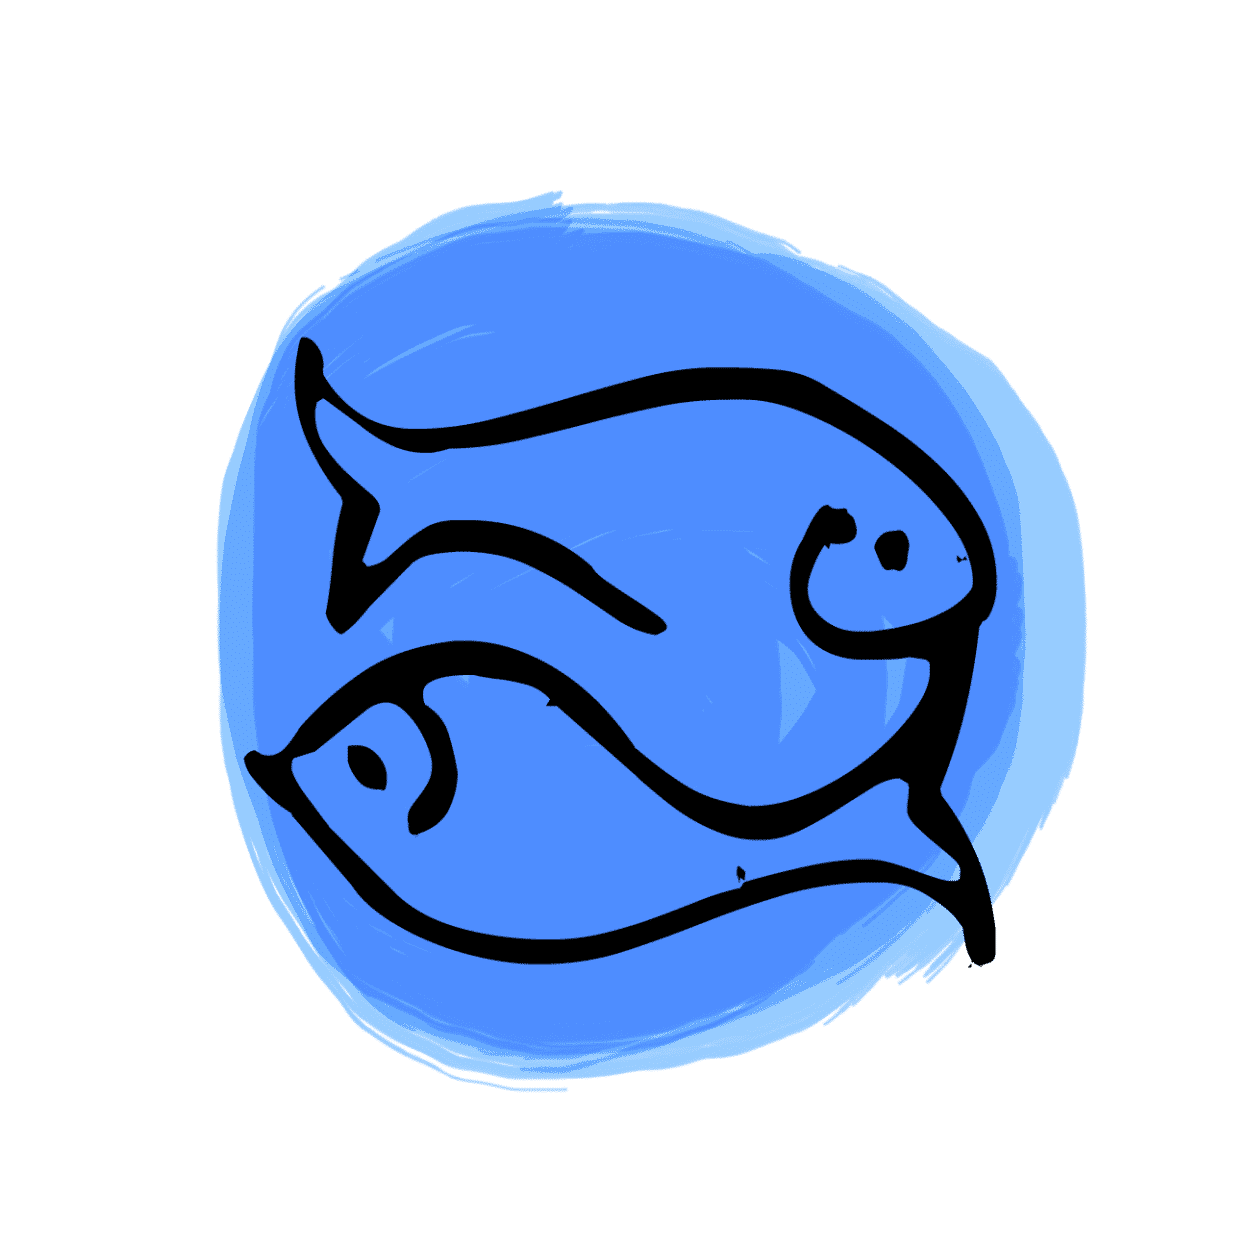 Peixes- O signo do Zodíaco mais intuitivo e o mais ligado a espiritualidade